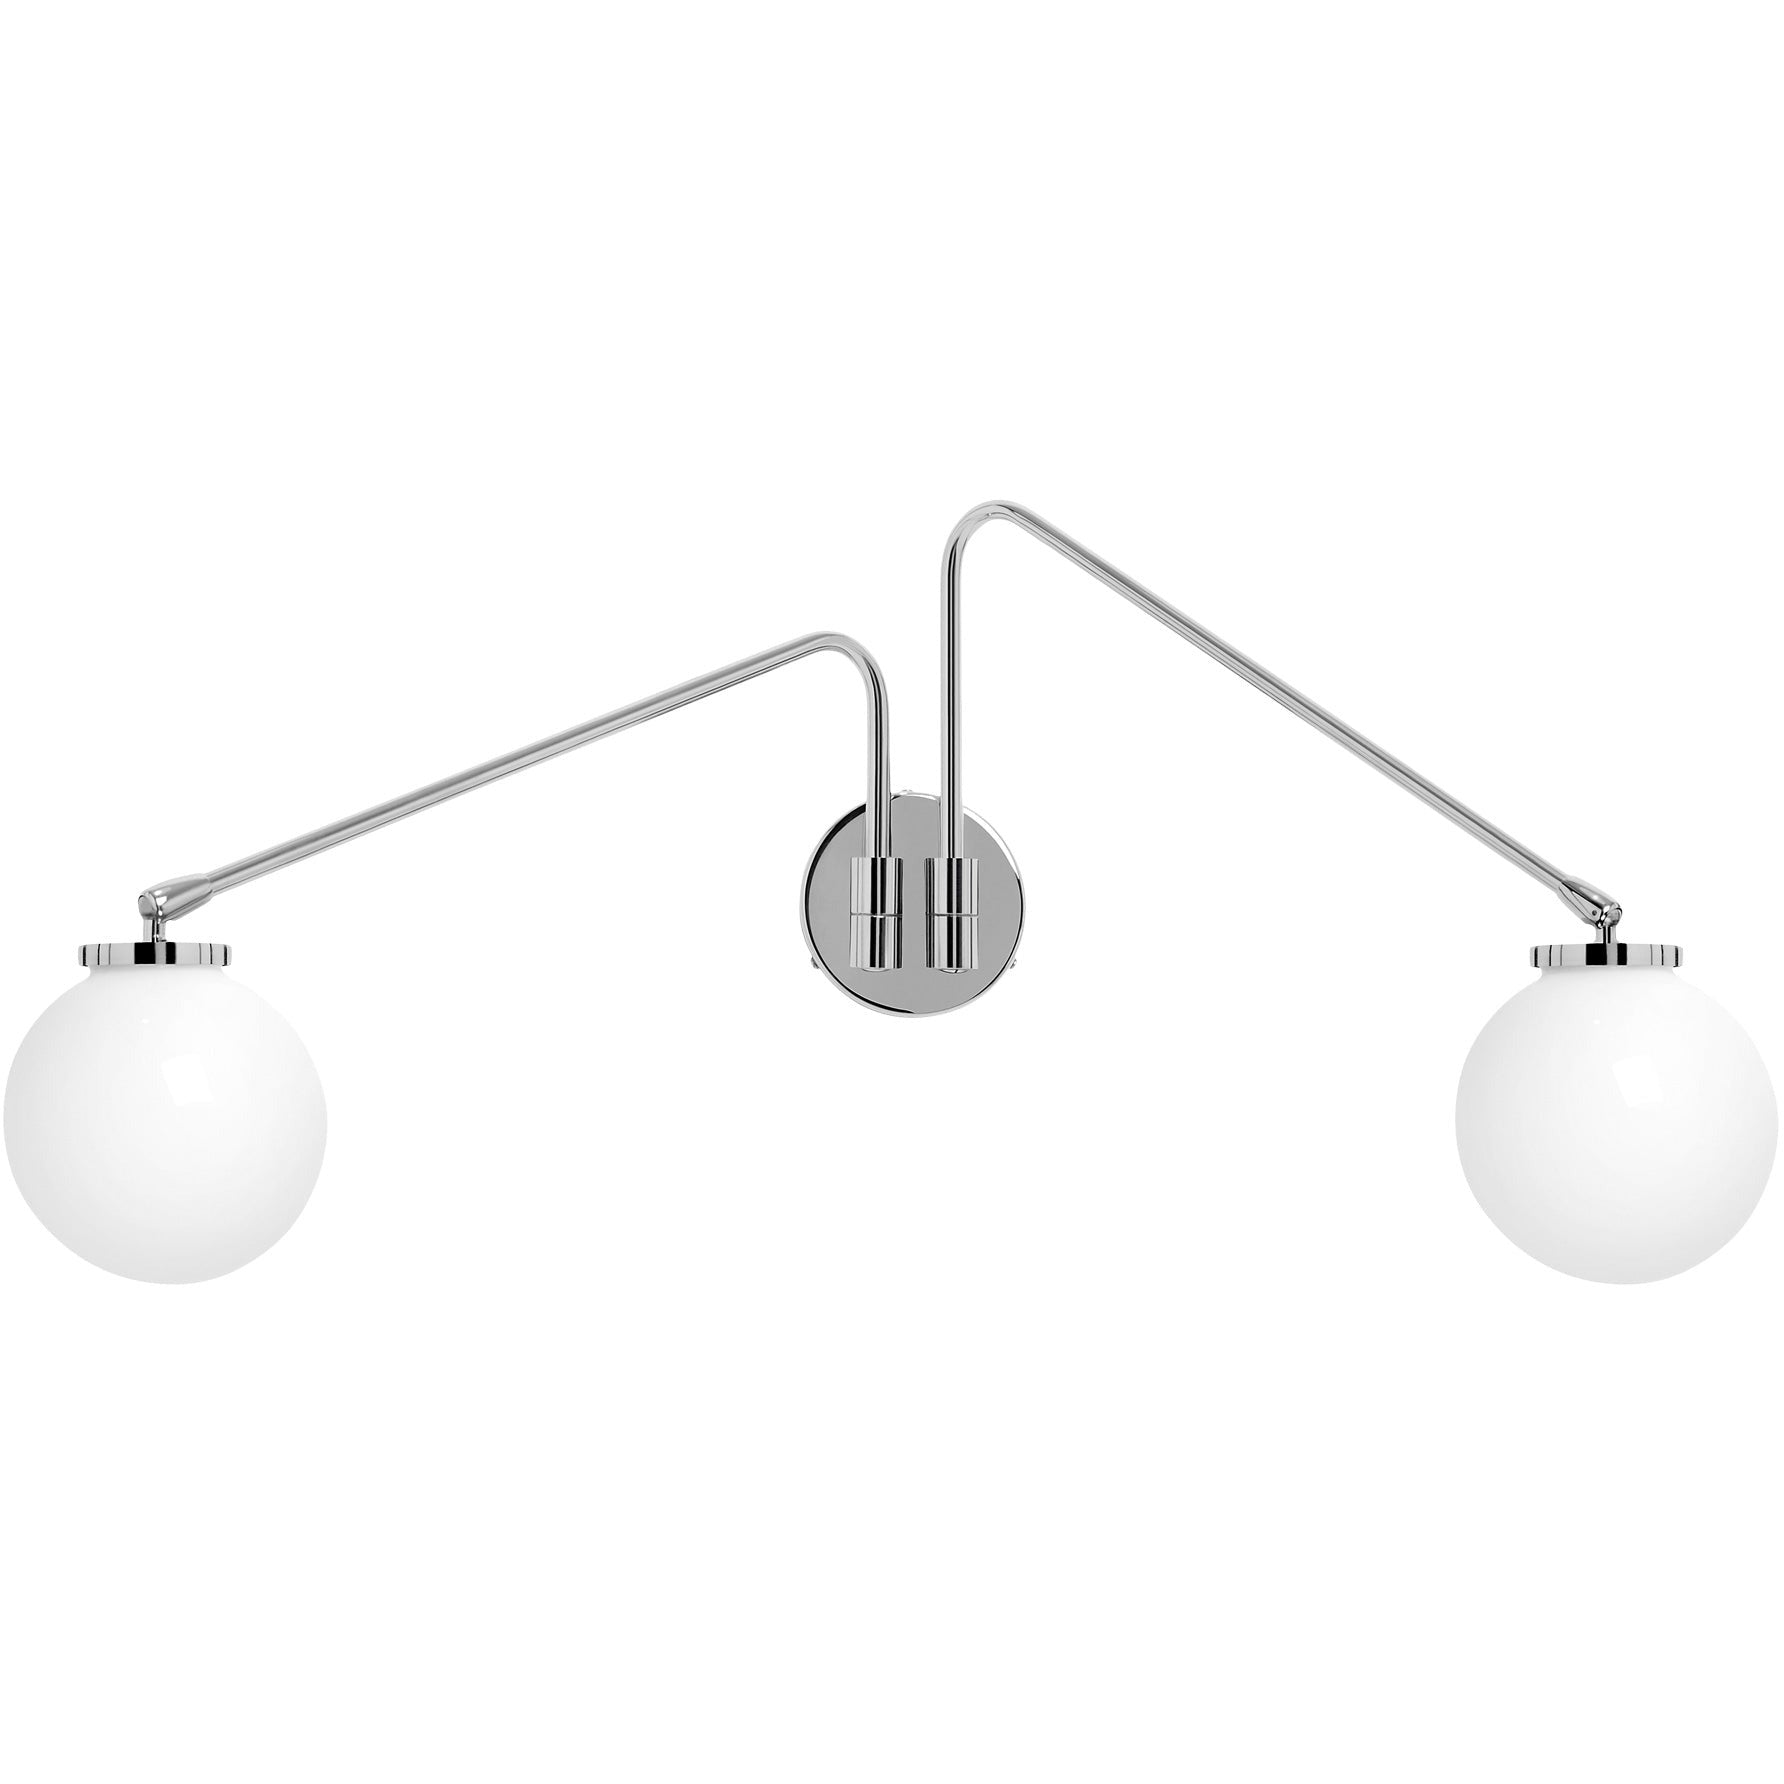 ARRAY TWIN OPAL WALL LIGHT - CTO LIGHTING | Modern Furniture + Decor